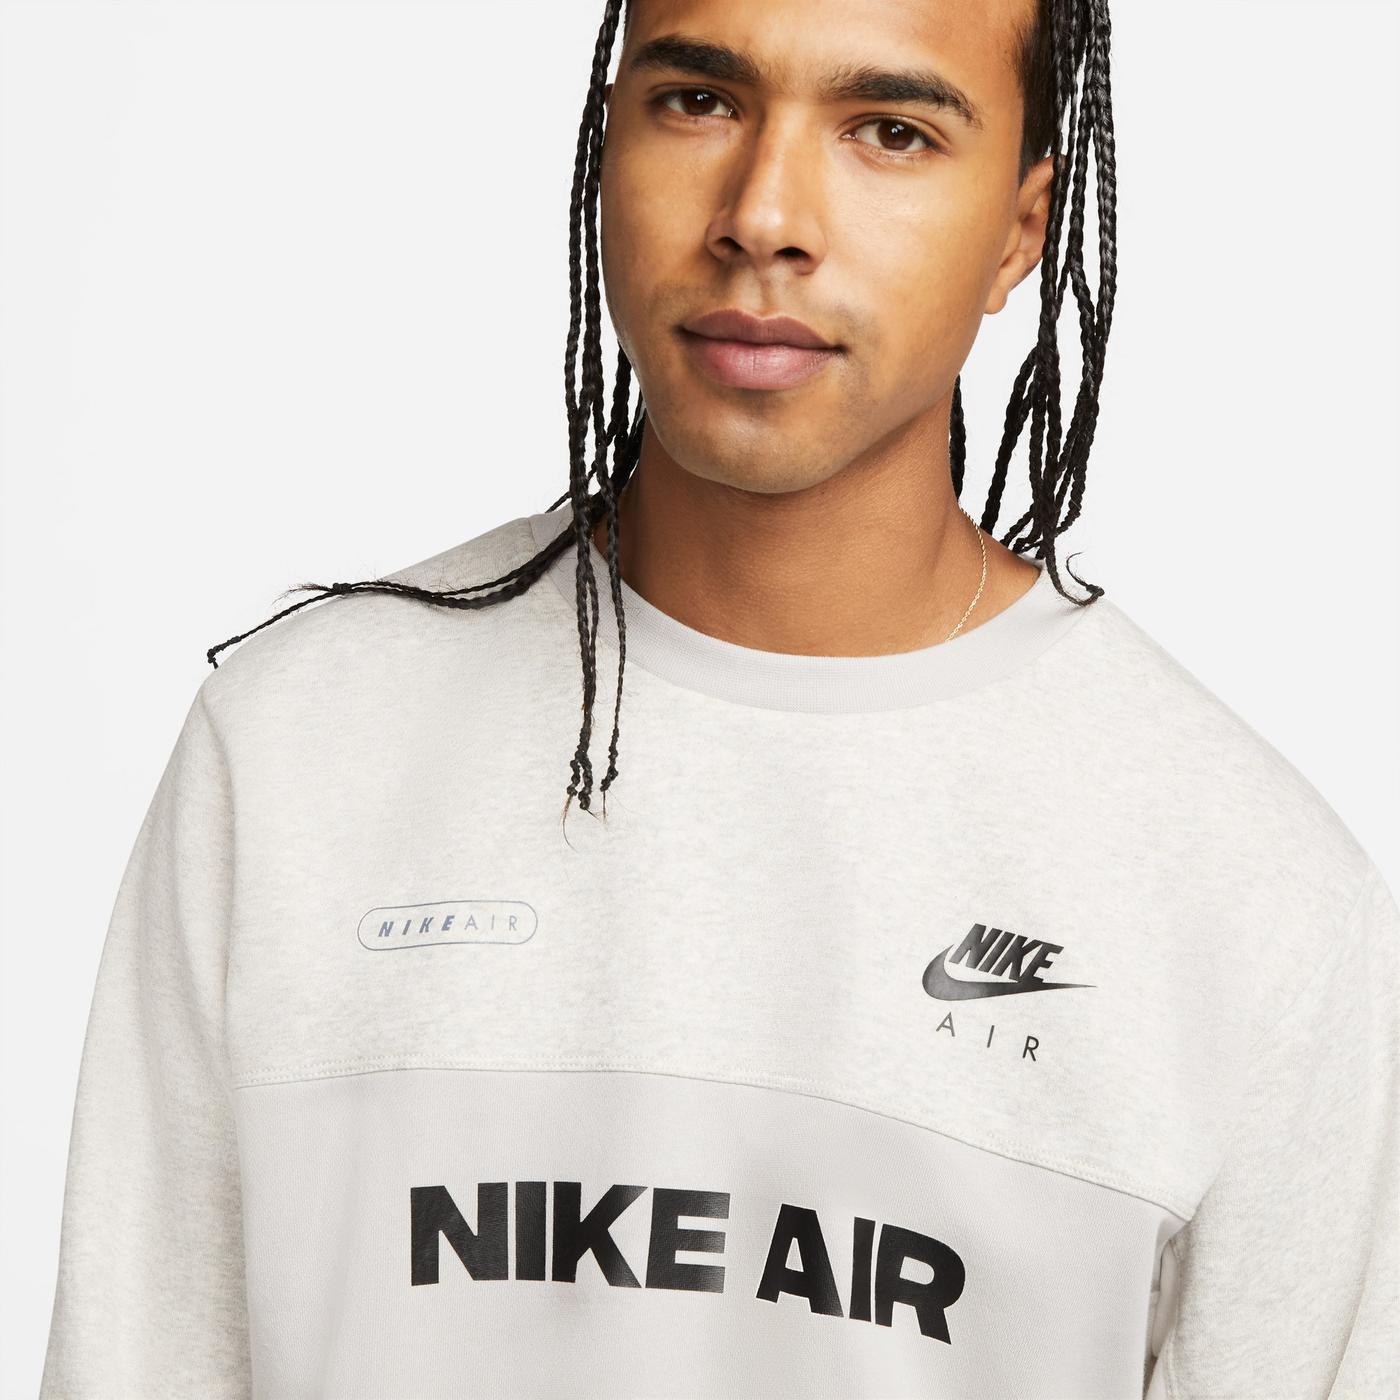 Nike Air Erkek Beyaz Sweatshirt